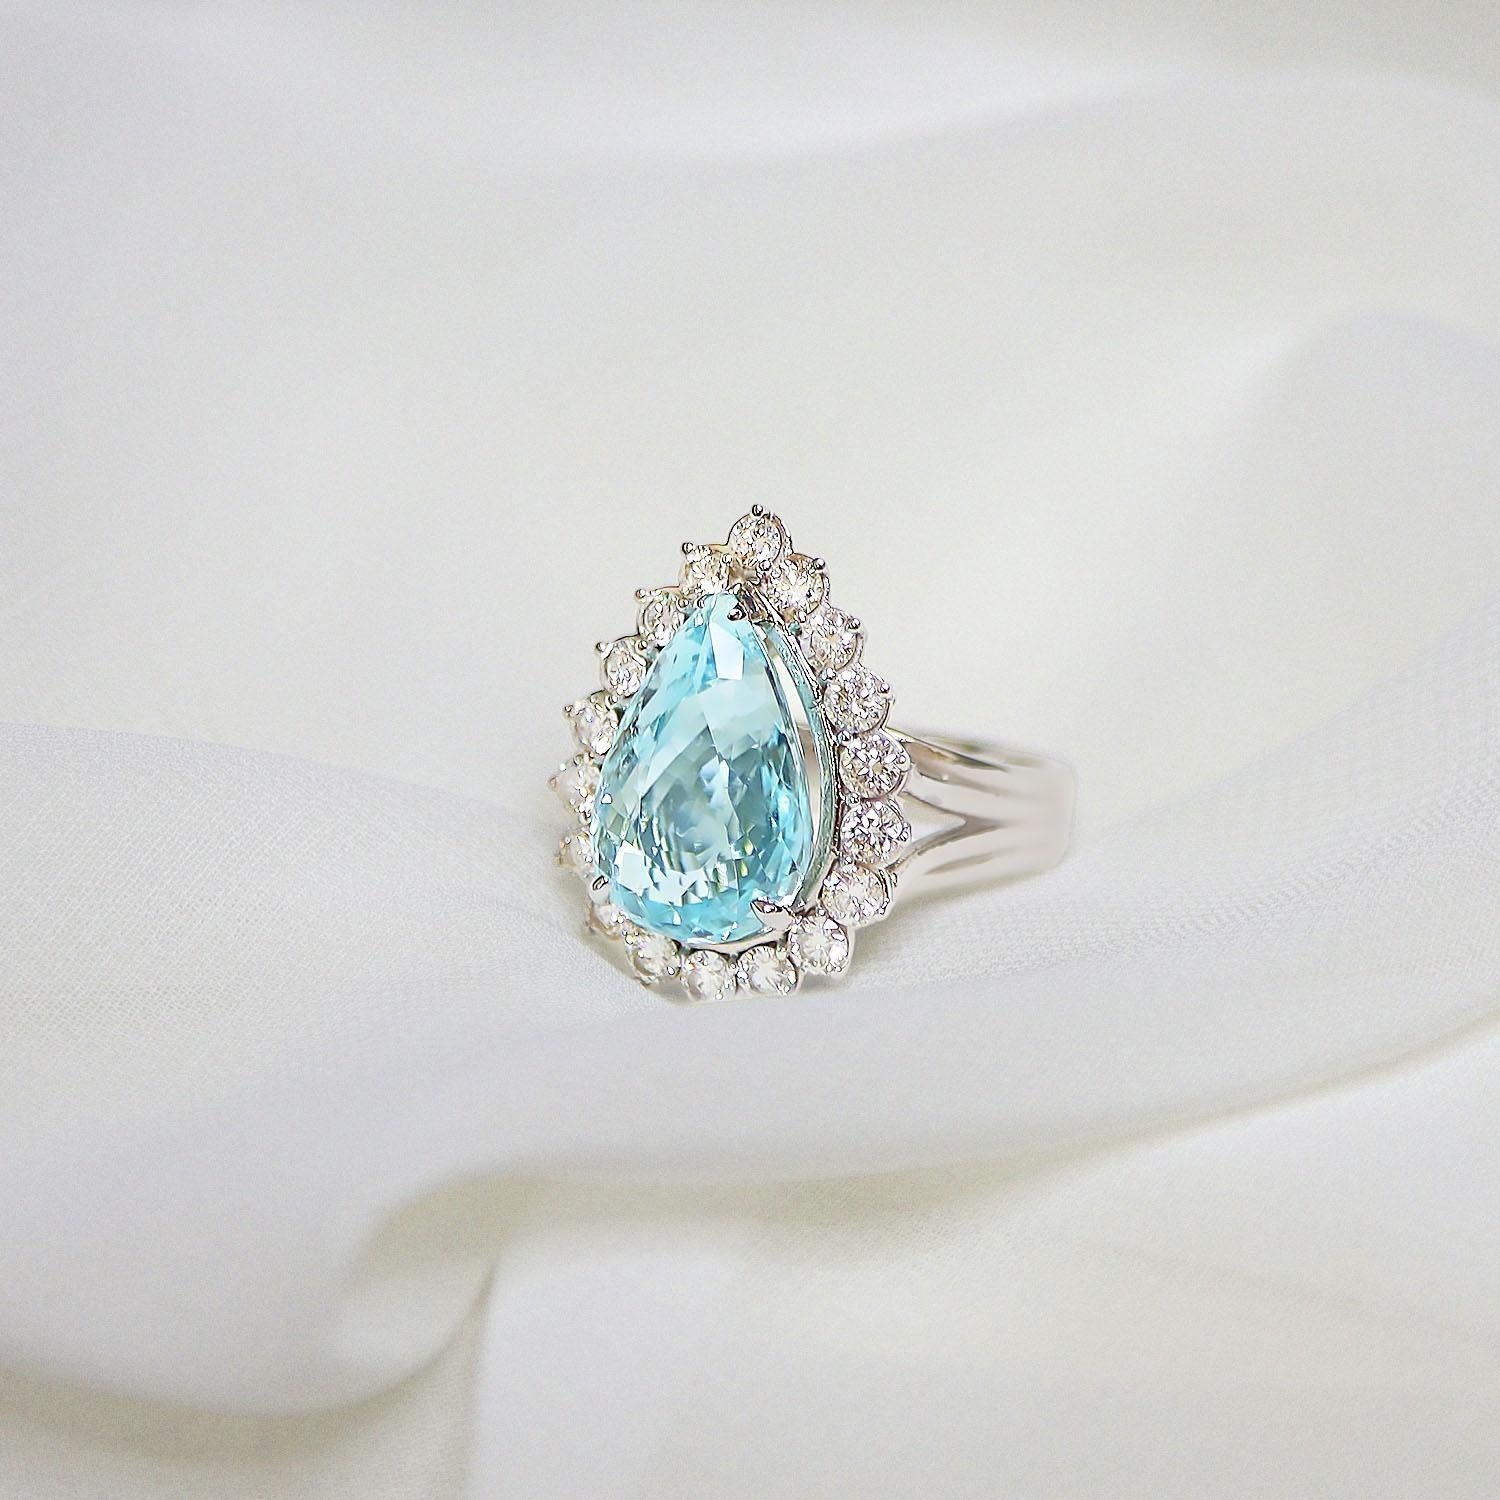 Contemporary GIA 18K 6.21 Carat Paraiba&Diamonds Art Deco Style Engagement Ring For Sale